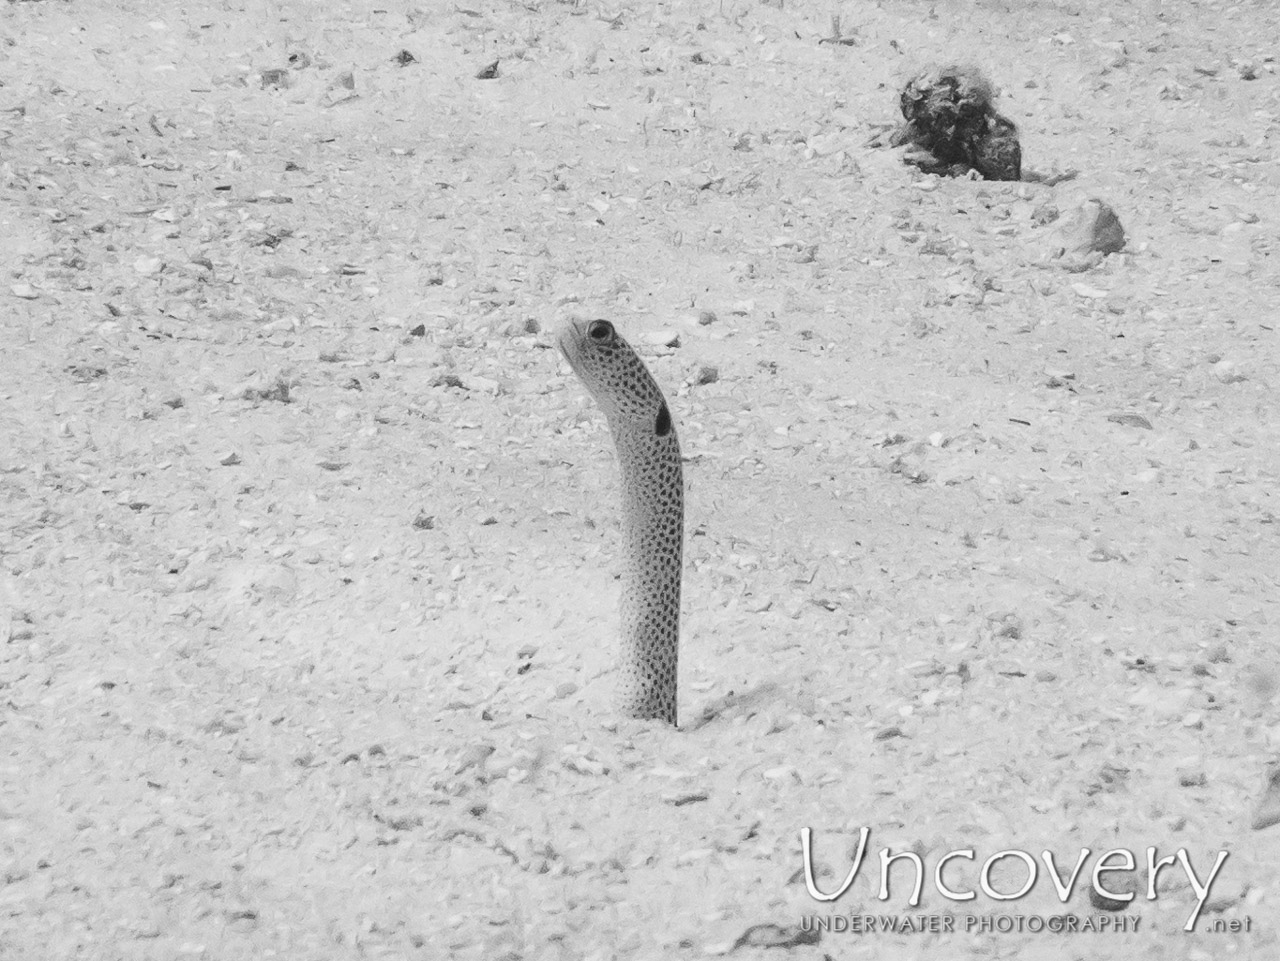 Spotted Garden Eel (heteroconger Hassi), photo taken in Maldives, Male Atoll, South Male Atoll, Biadhu Giri